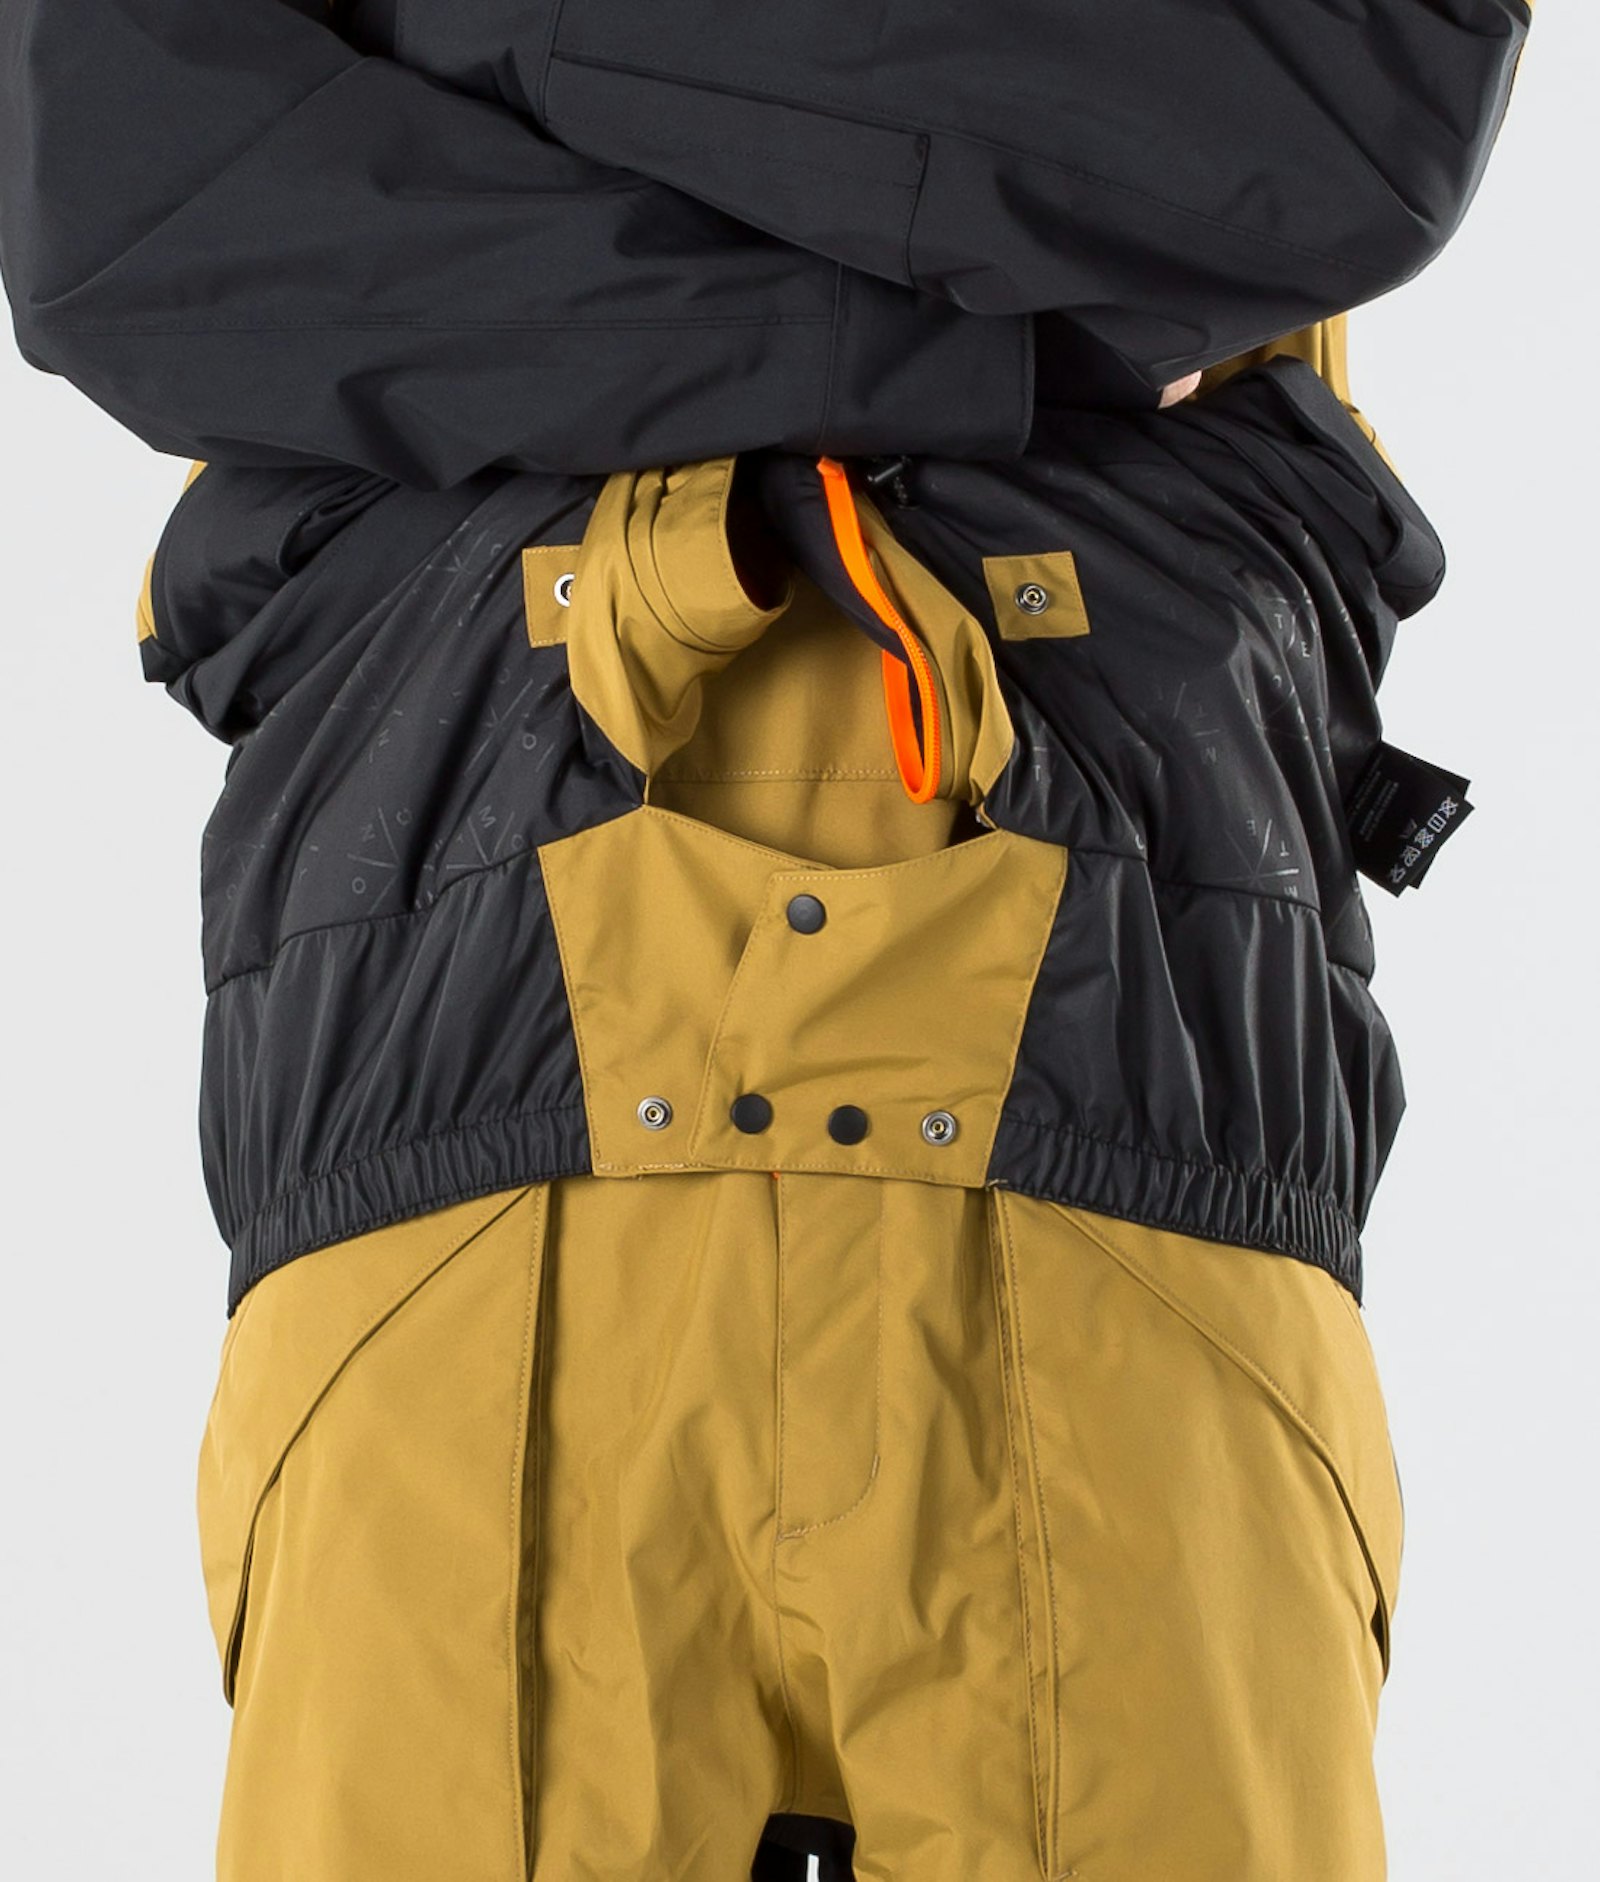 Fenix Snowboard Jacket Men Gold/Black